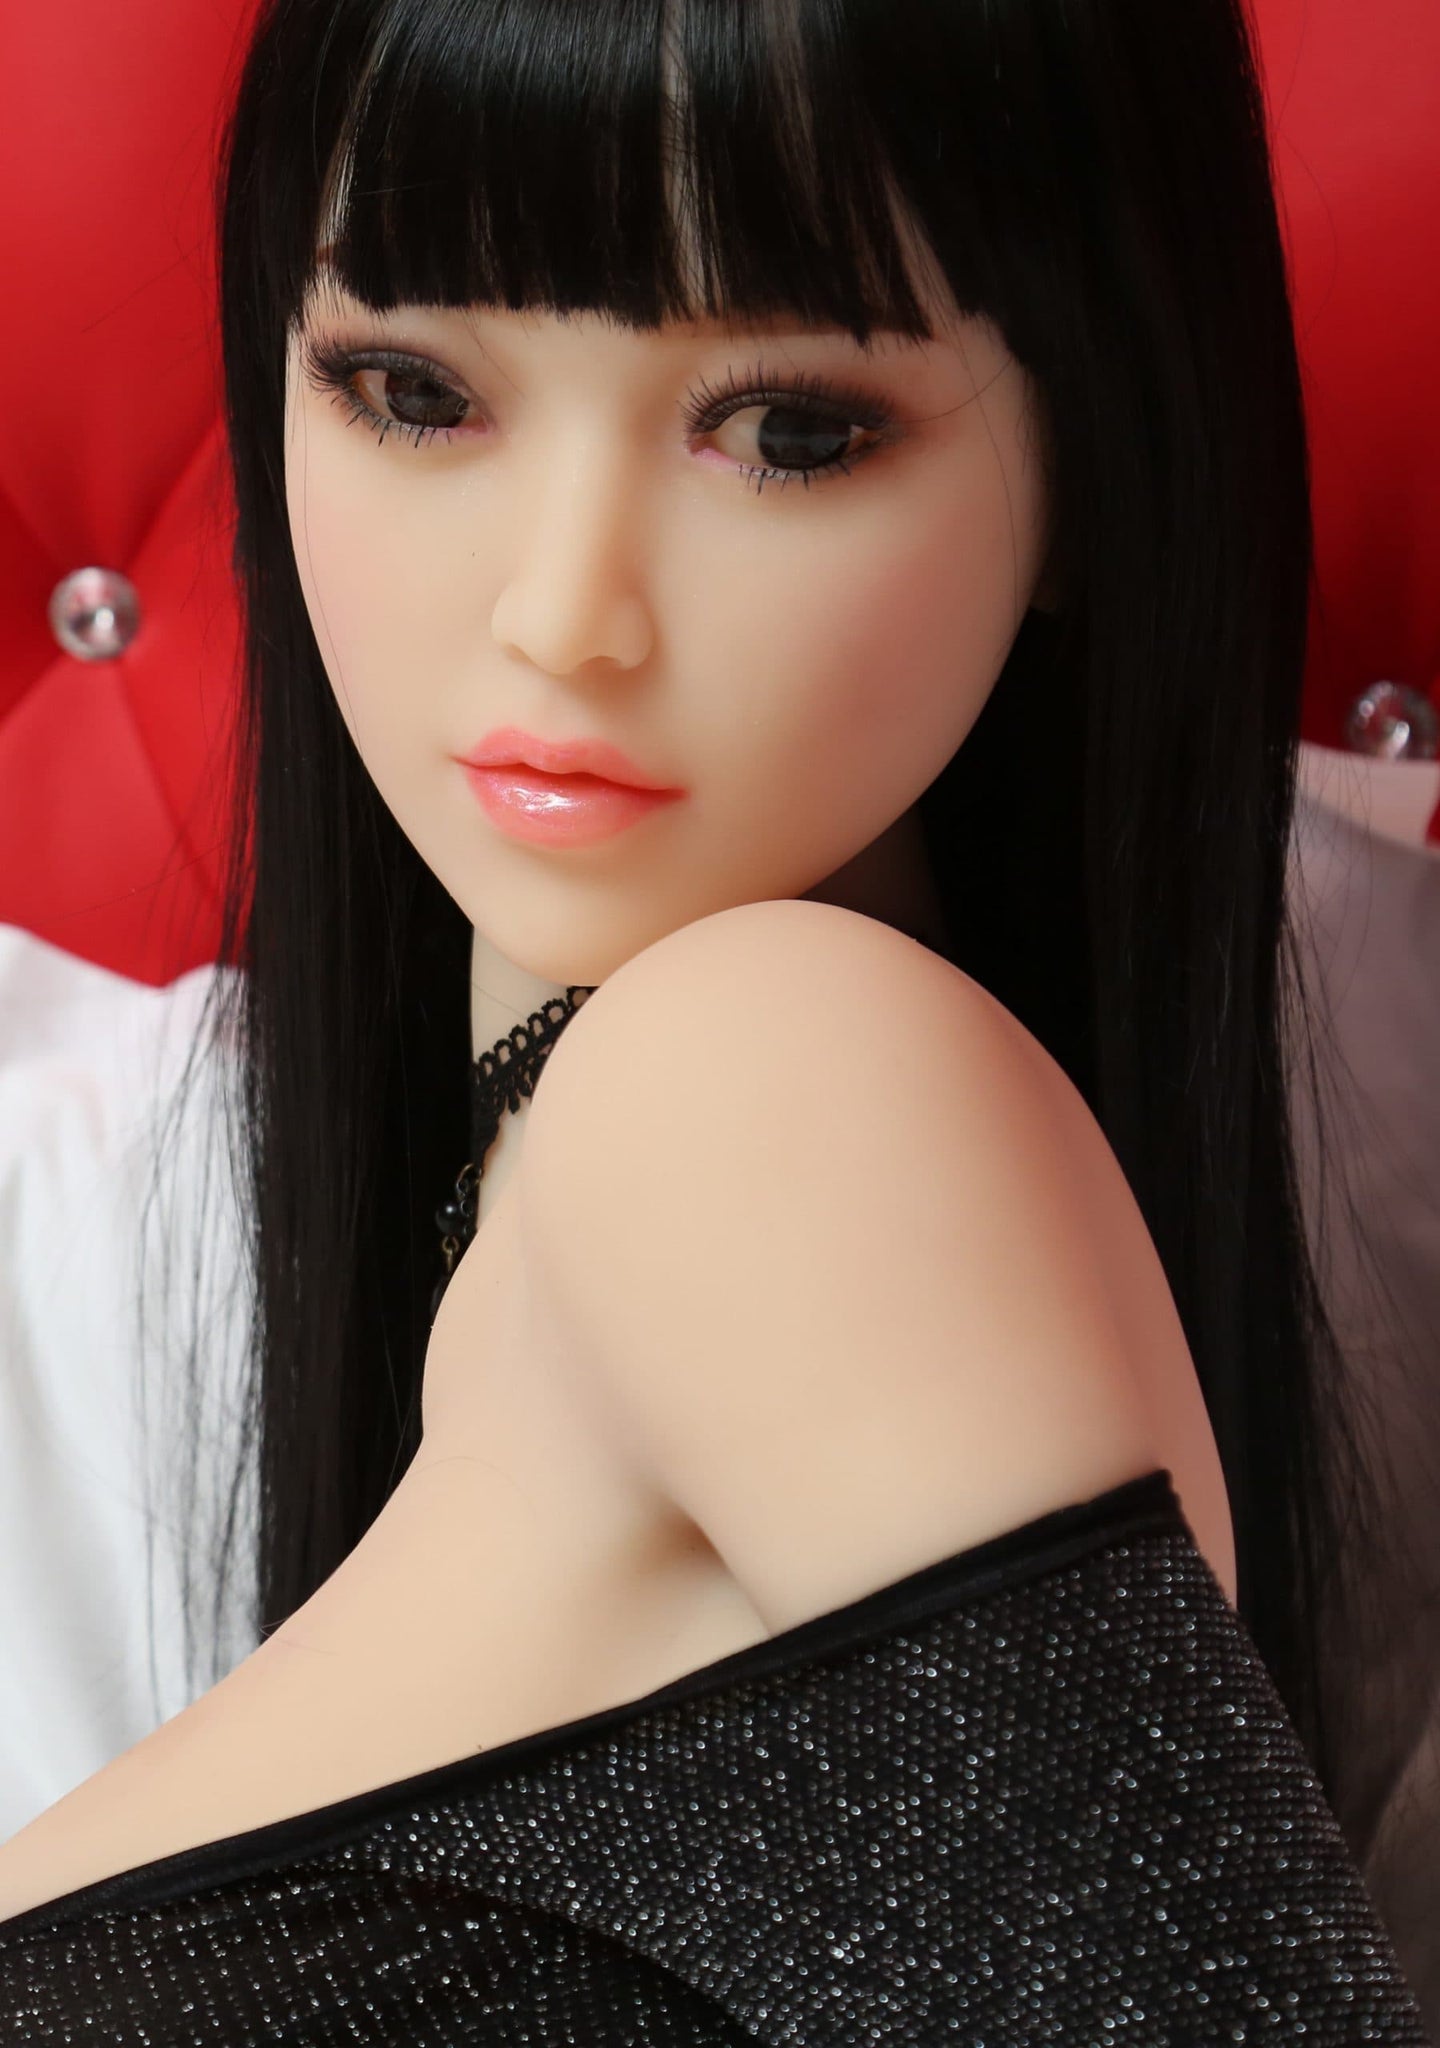 takayo 160cm black hair japanese big boobs athletic tpe asian teen sex doll(3)